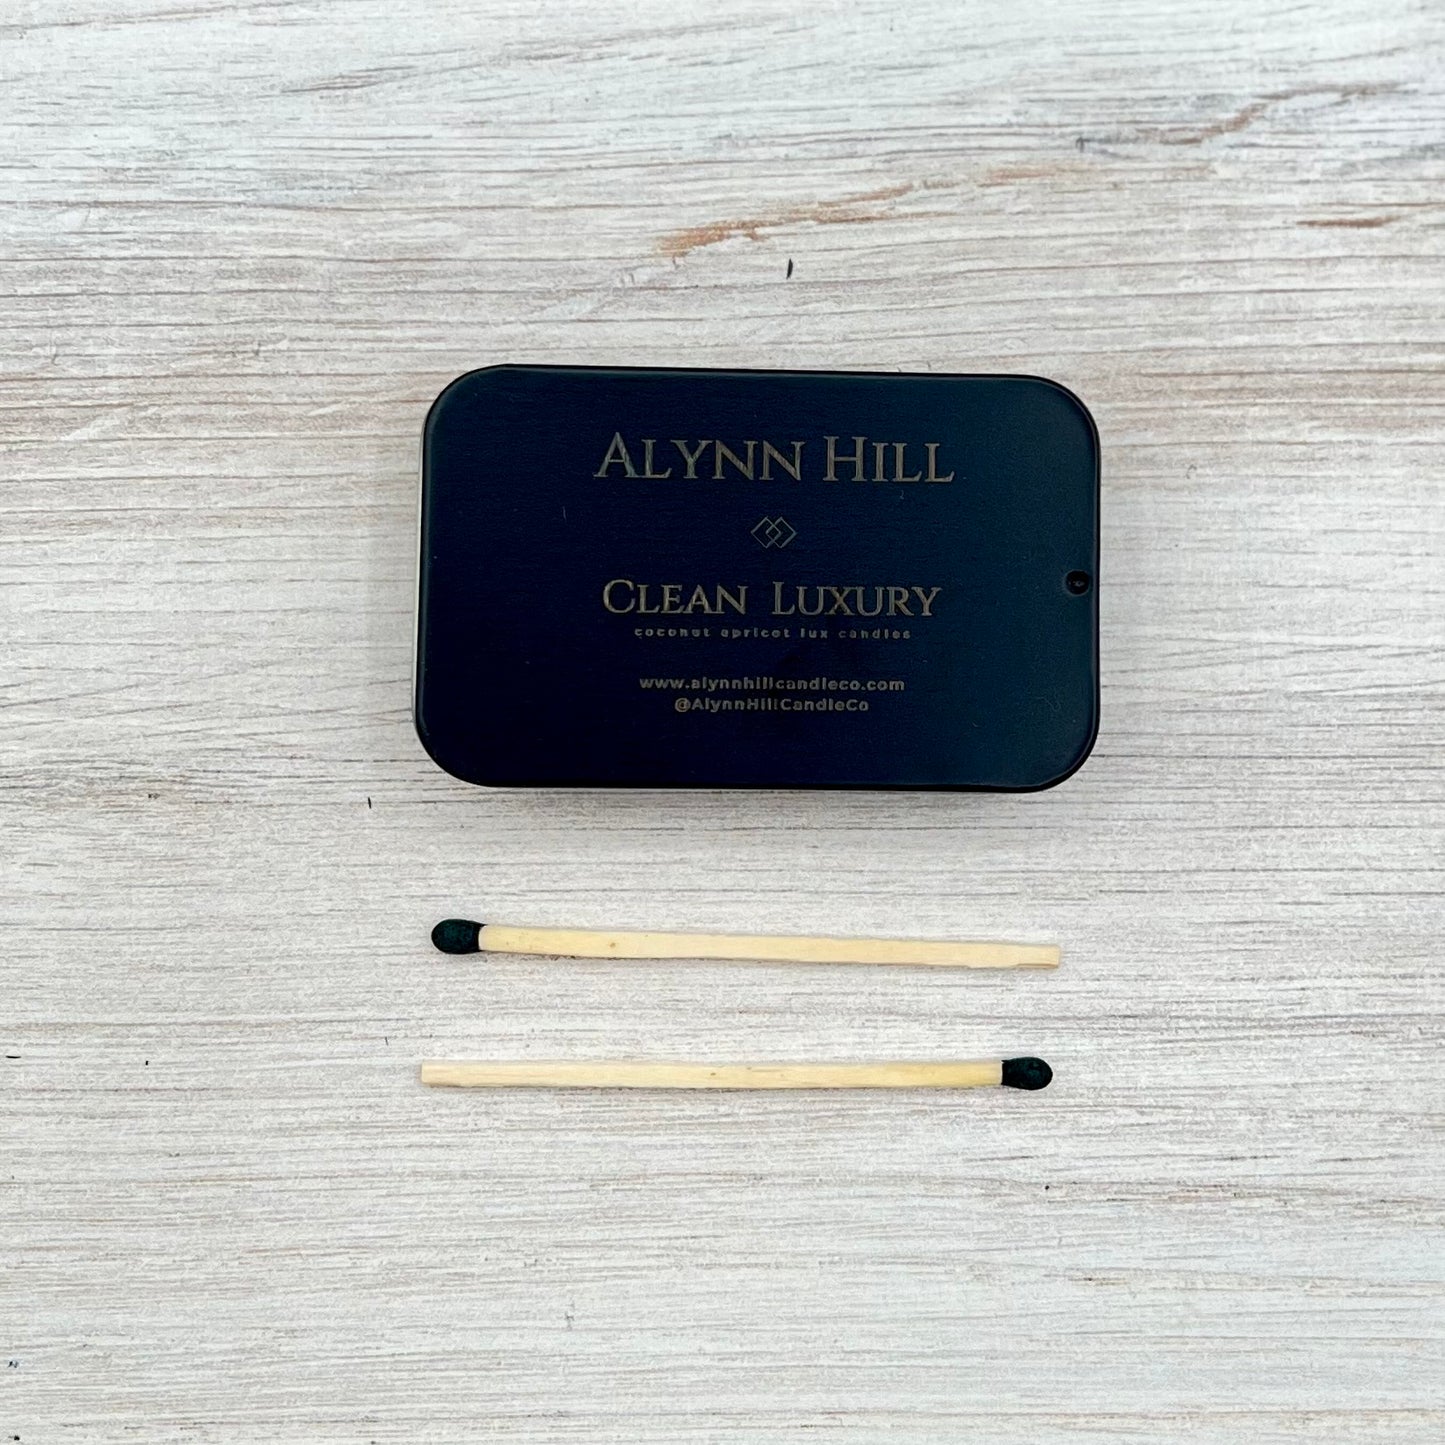 Match Box - Alynn Hill